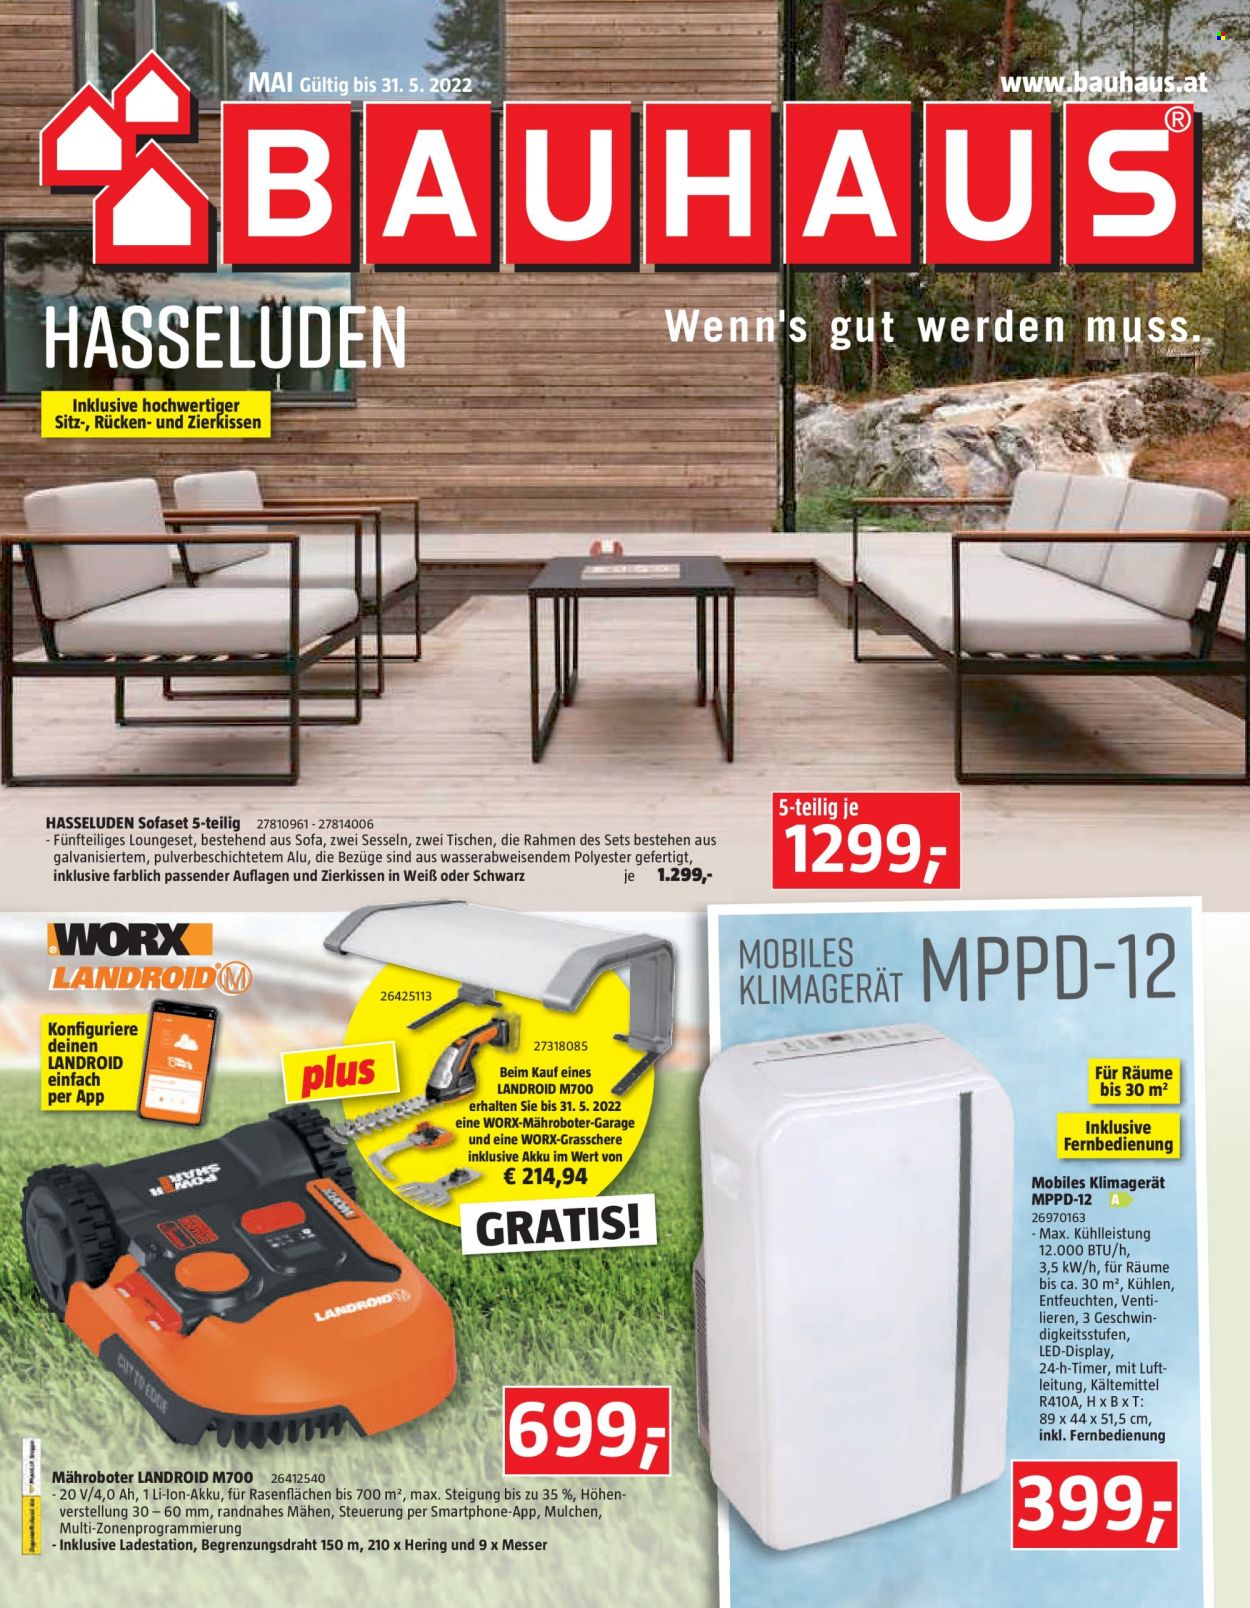 Angebote Bauhaus - 1.5.2022 - 31.5.2022. Seite 1.